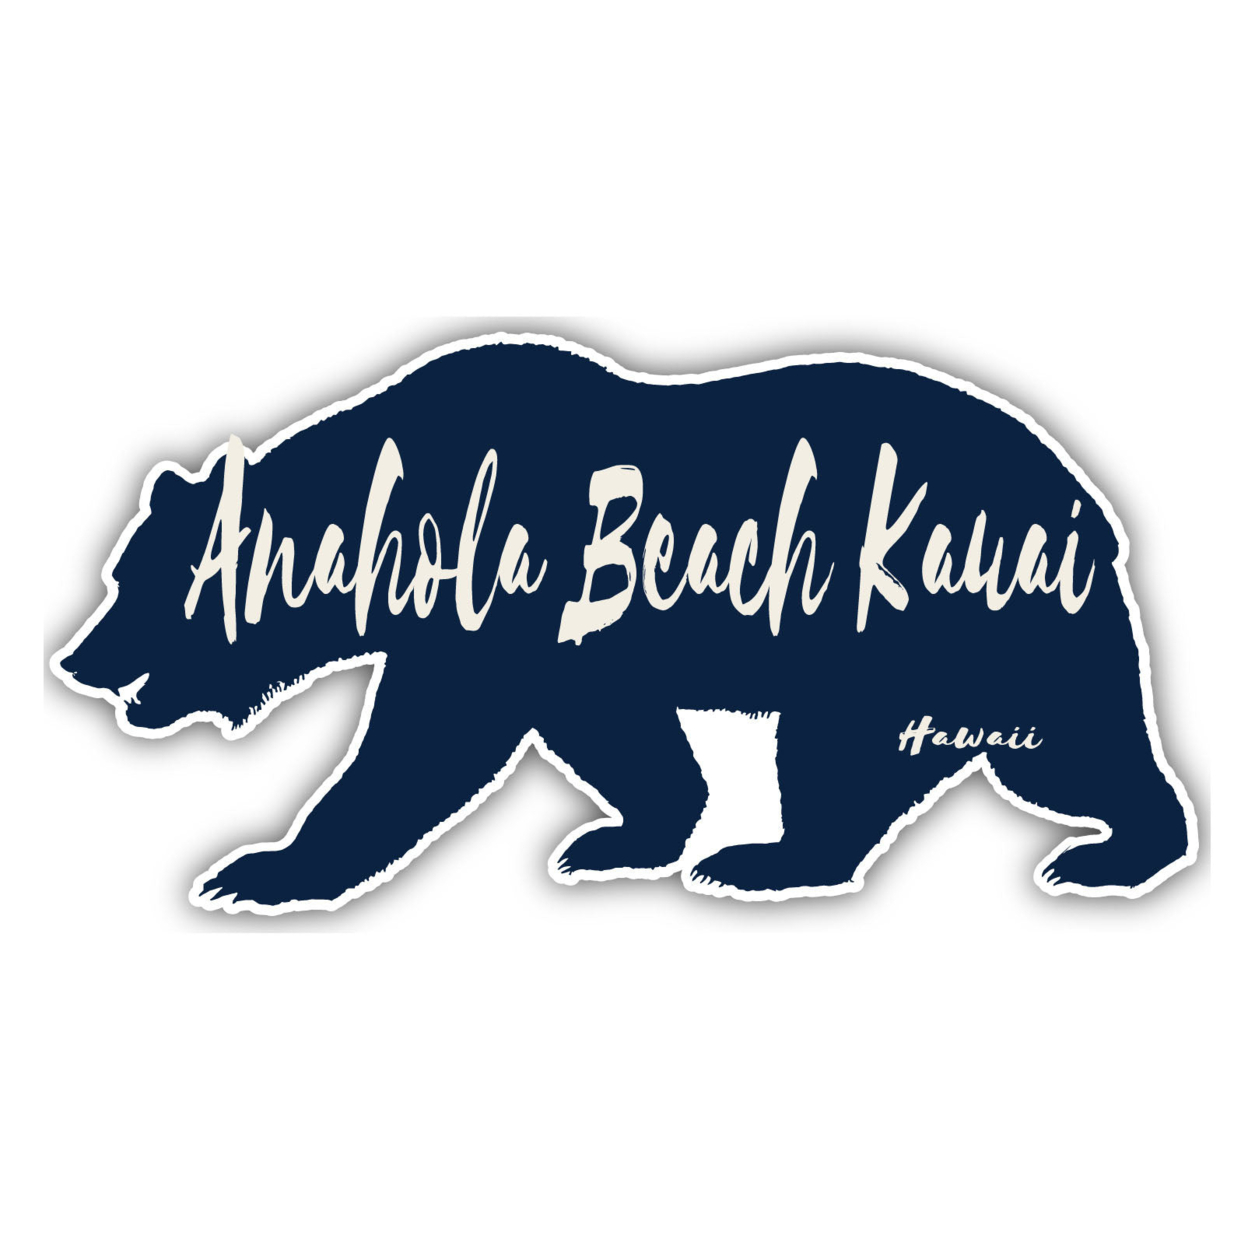 Anahola Beach Kauai Hawaii Souvenir Decorative Stickers (Choose Theme And Size) - Single Unit, 6-Inch, Bear